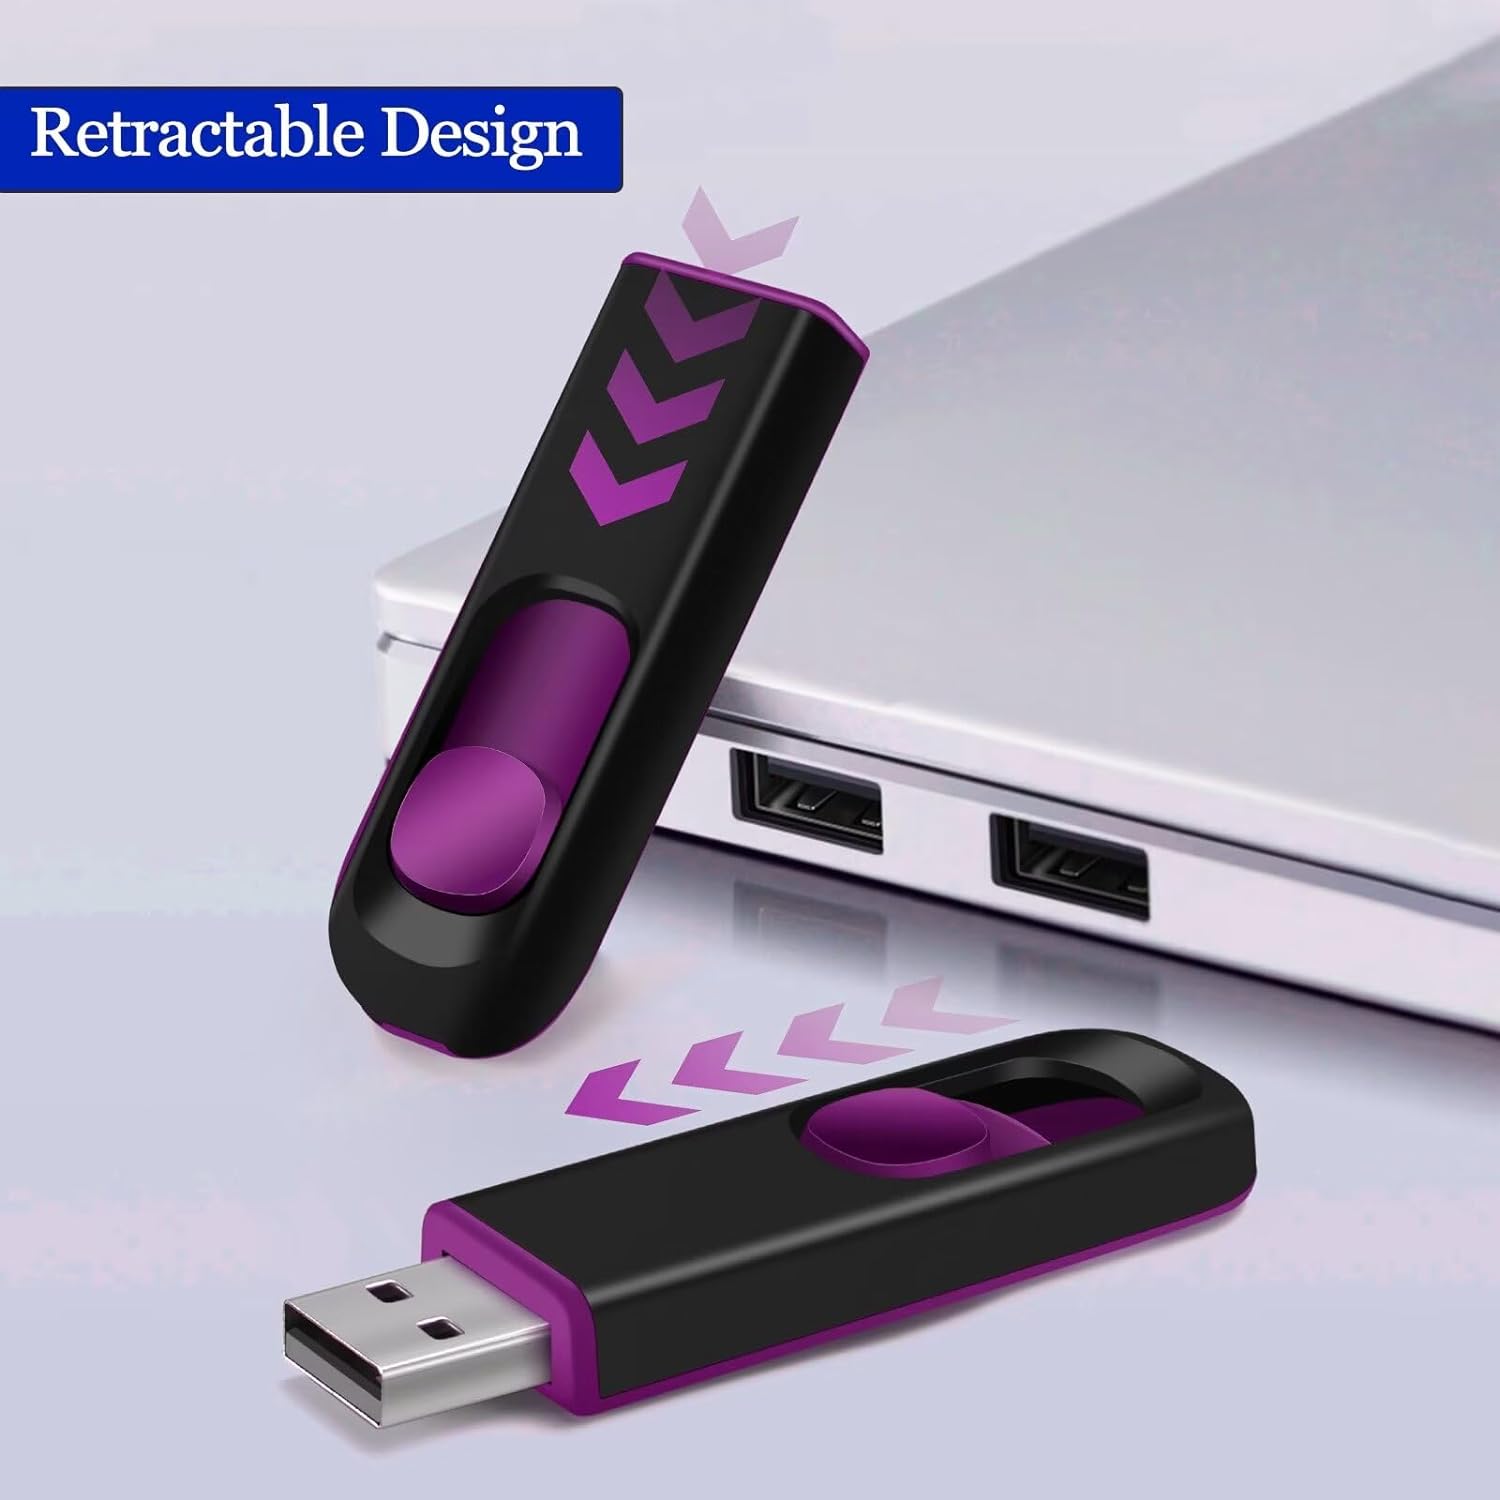 MAKACTUA 5 Pack 64GB USB Flash Drive, USB 2.0 Memory Stick Thumb Drive Pen Drives Jump Drive for Data Storage Multiple Color